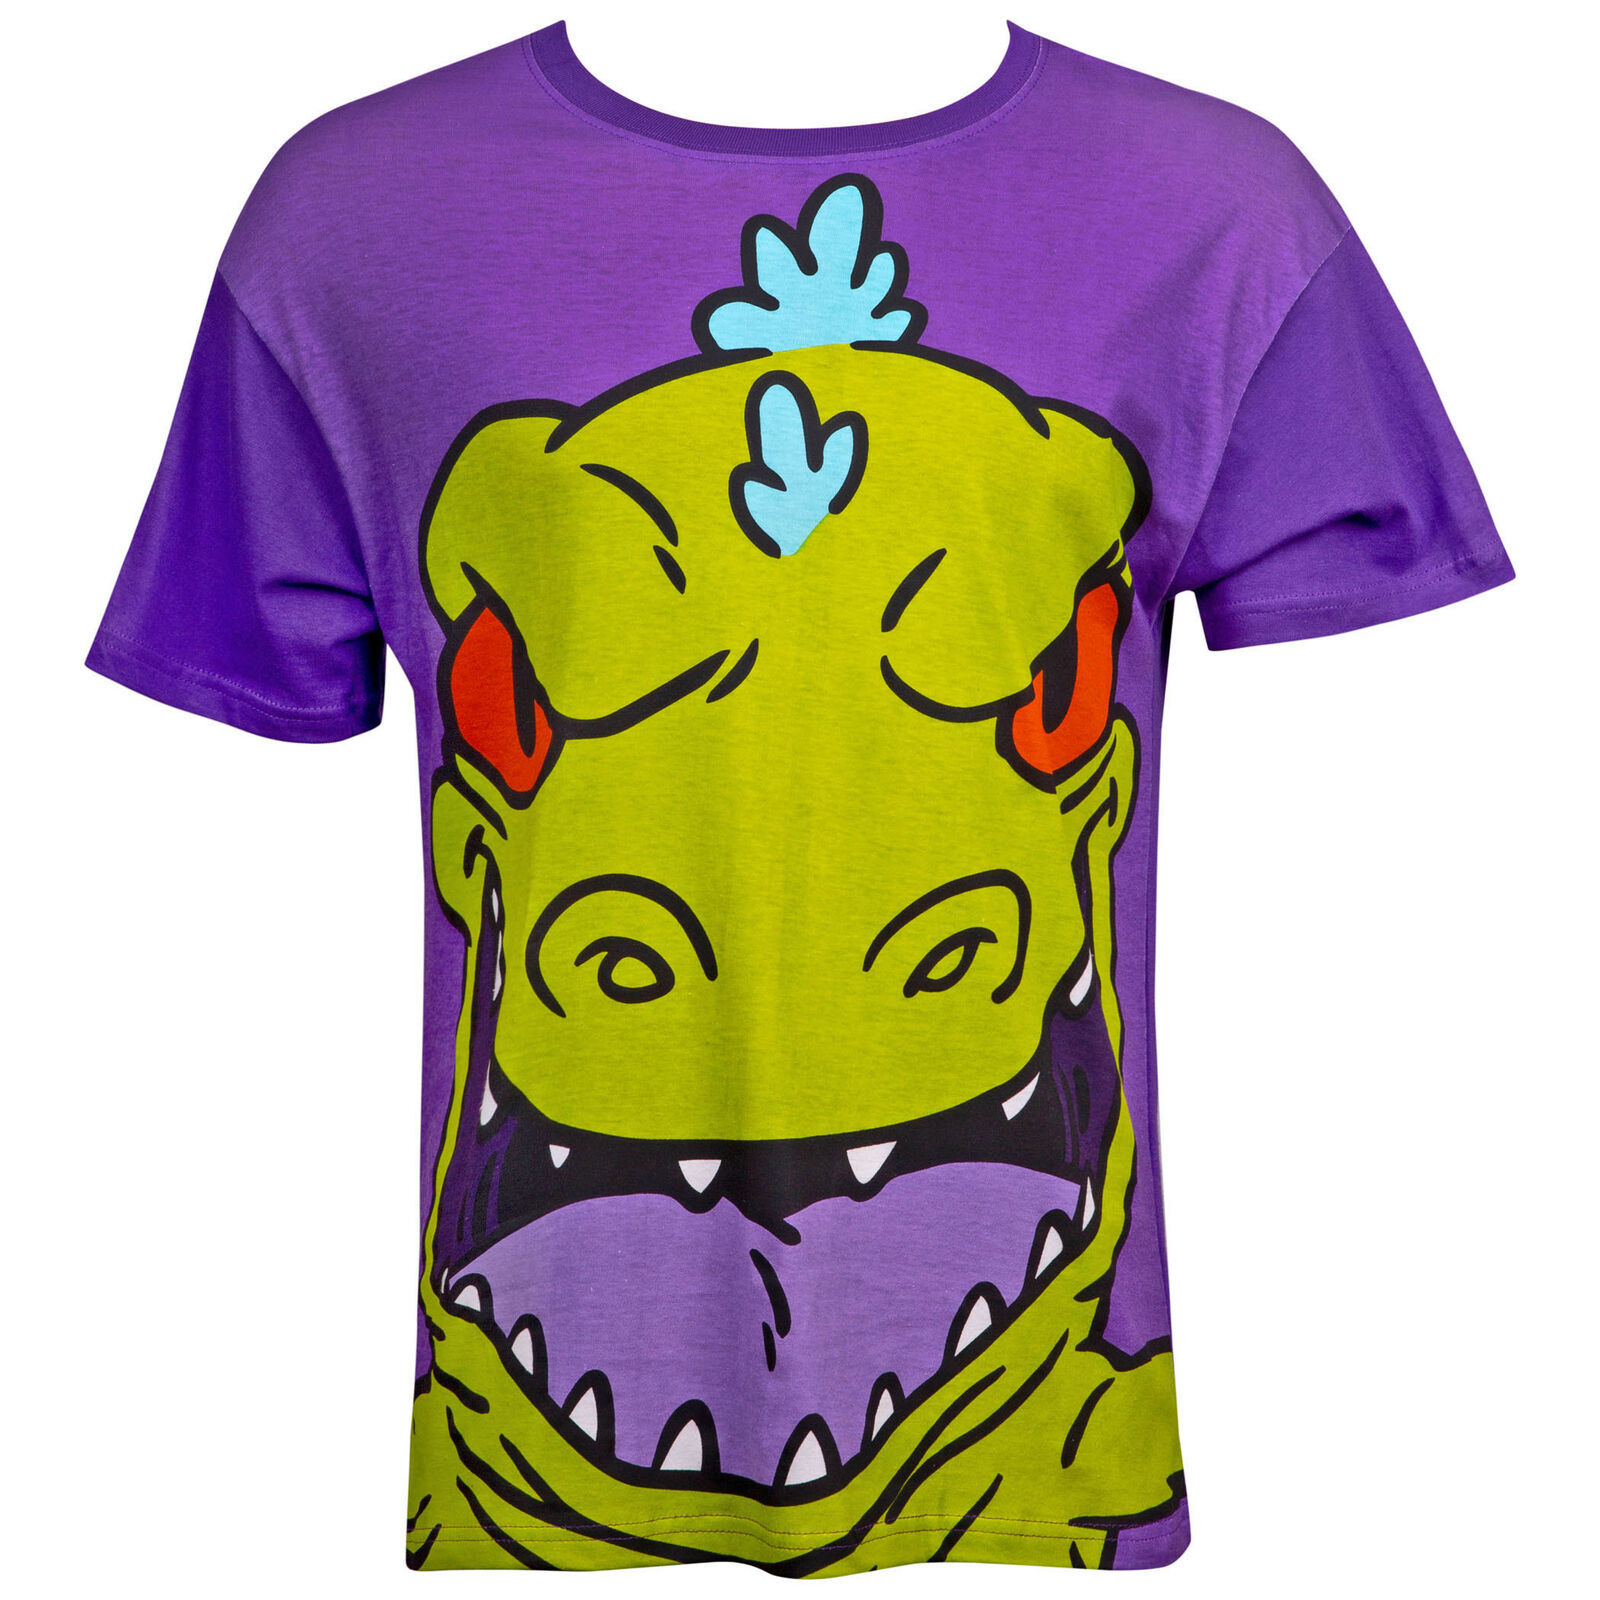 purple graphic tee shirts rugrats